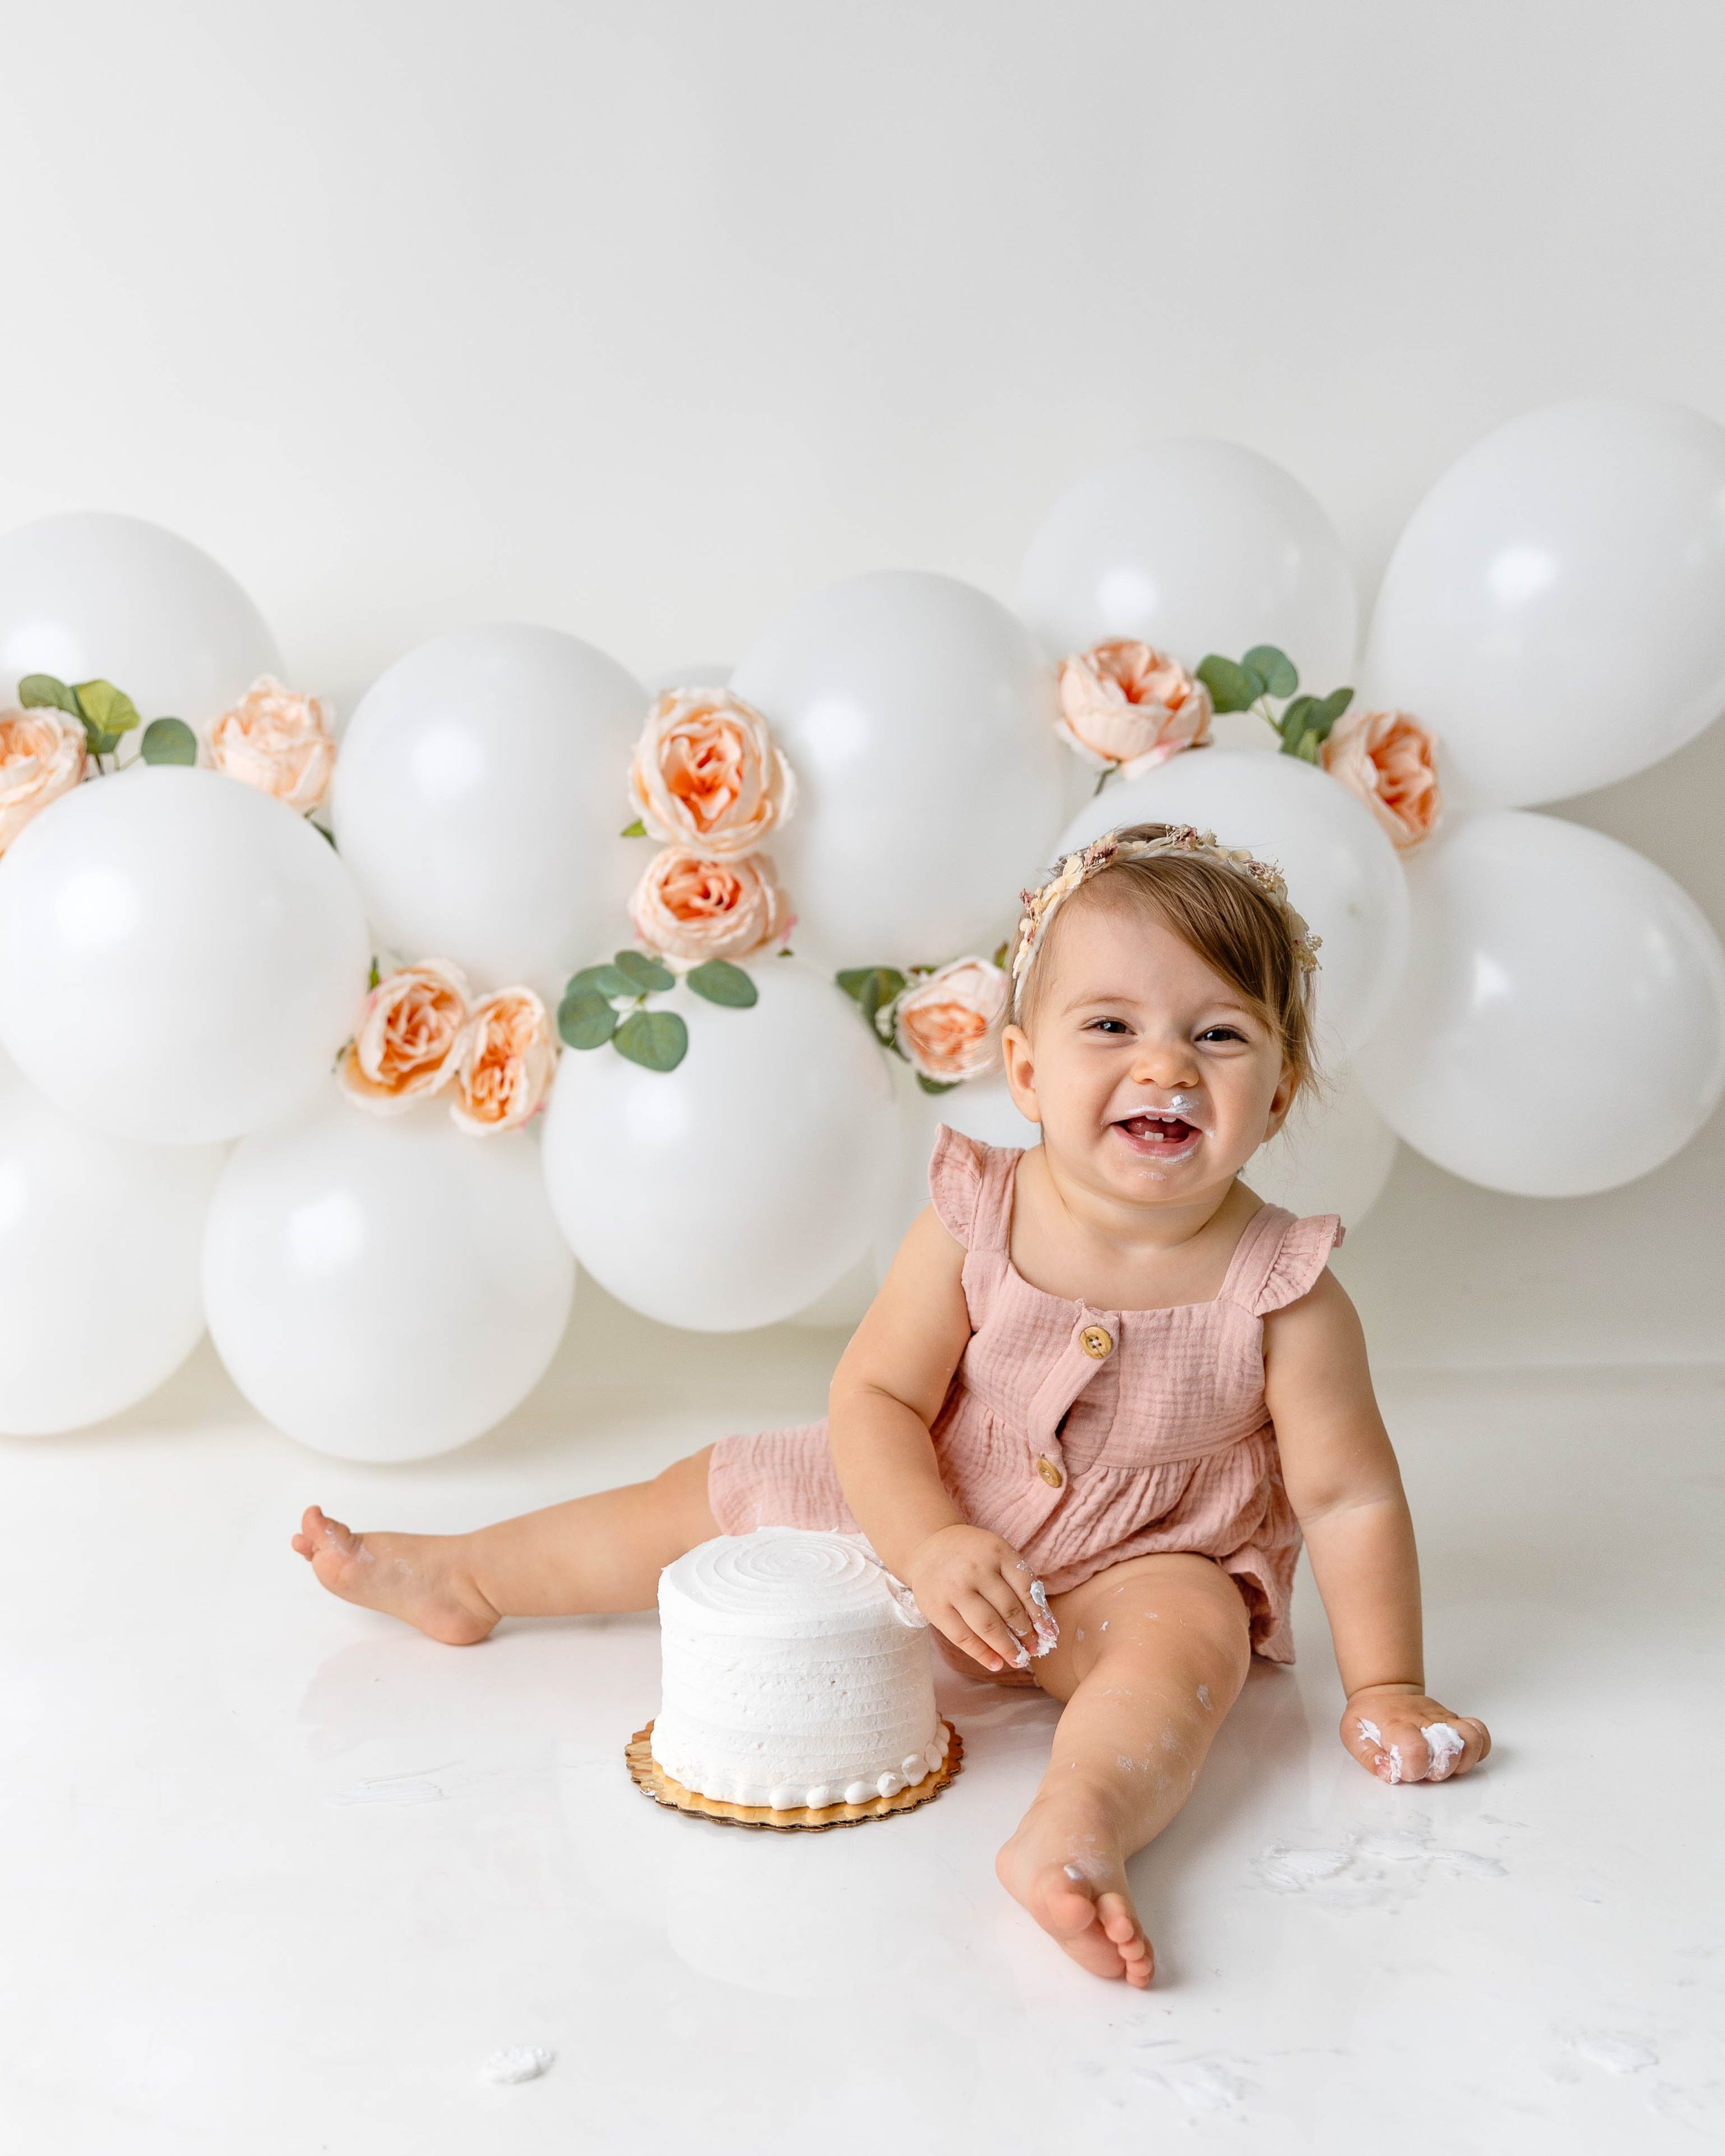 cake-smash-photos-first-birthday-images-newborn-photography-spokane-washington-9.jpg